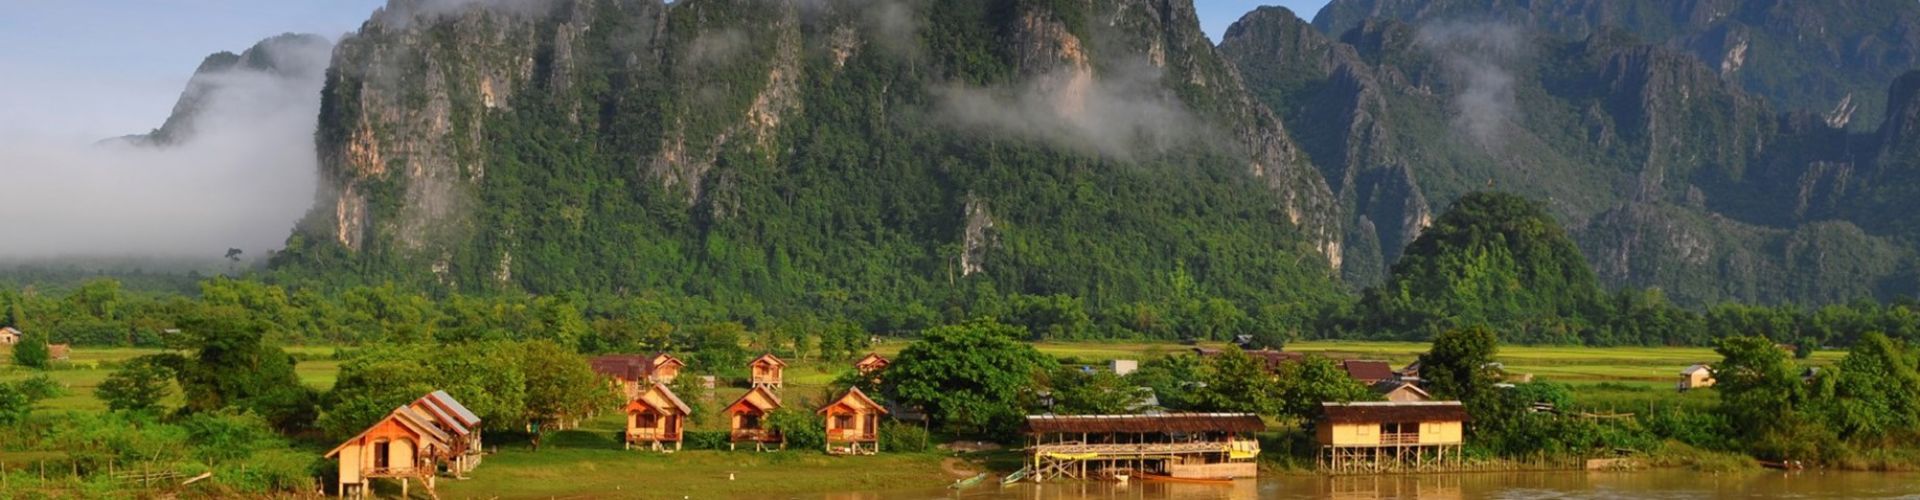 General Information in Laos